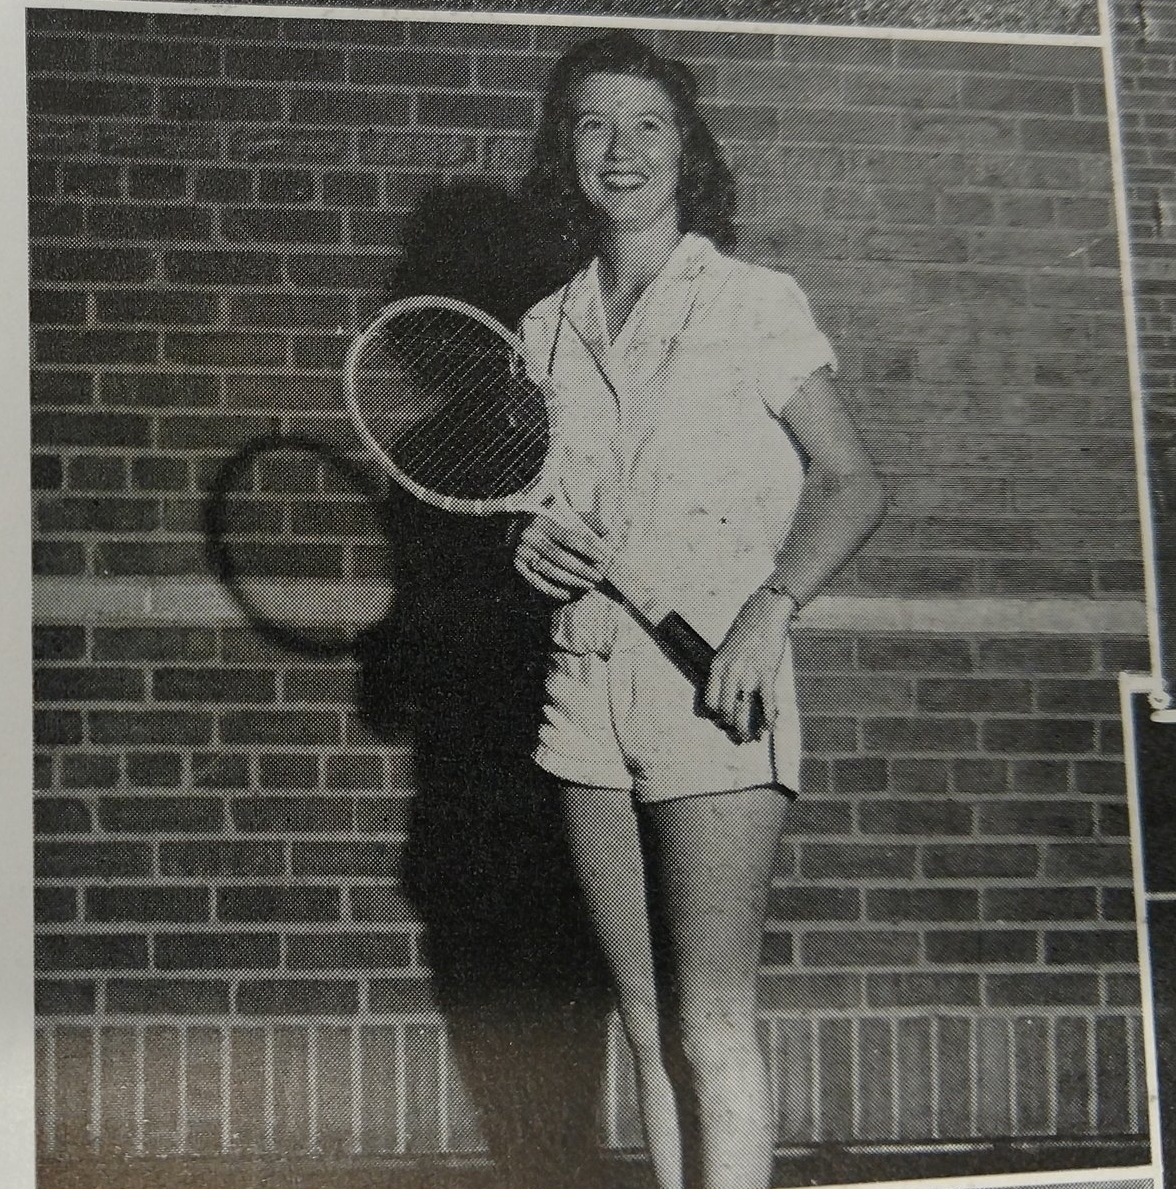 Peggy Vilbig - Tennis singles champ 